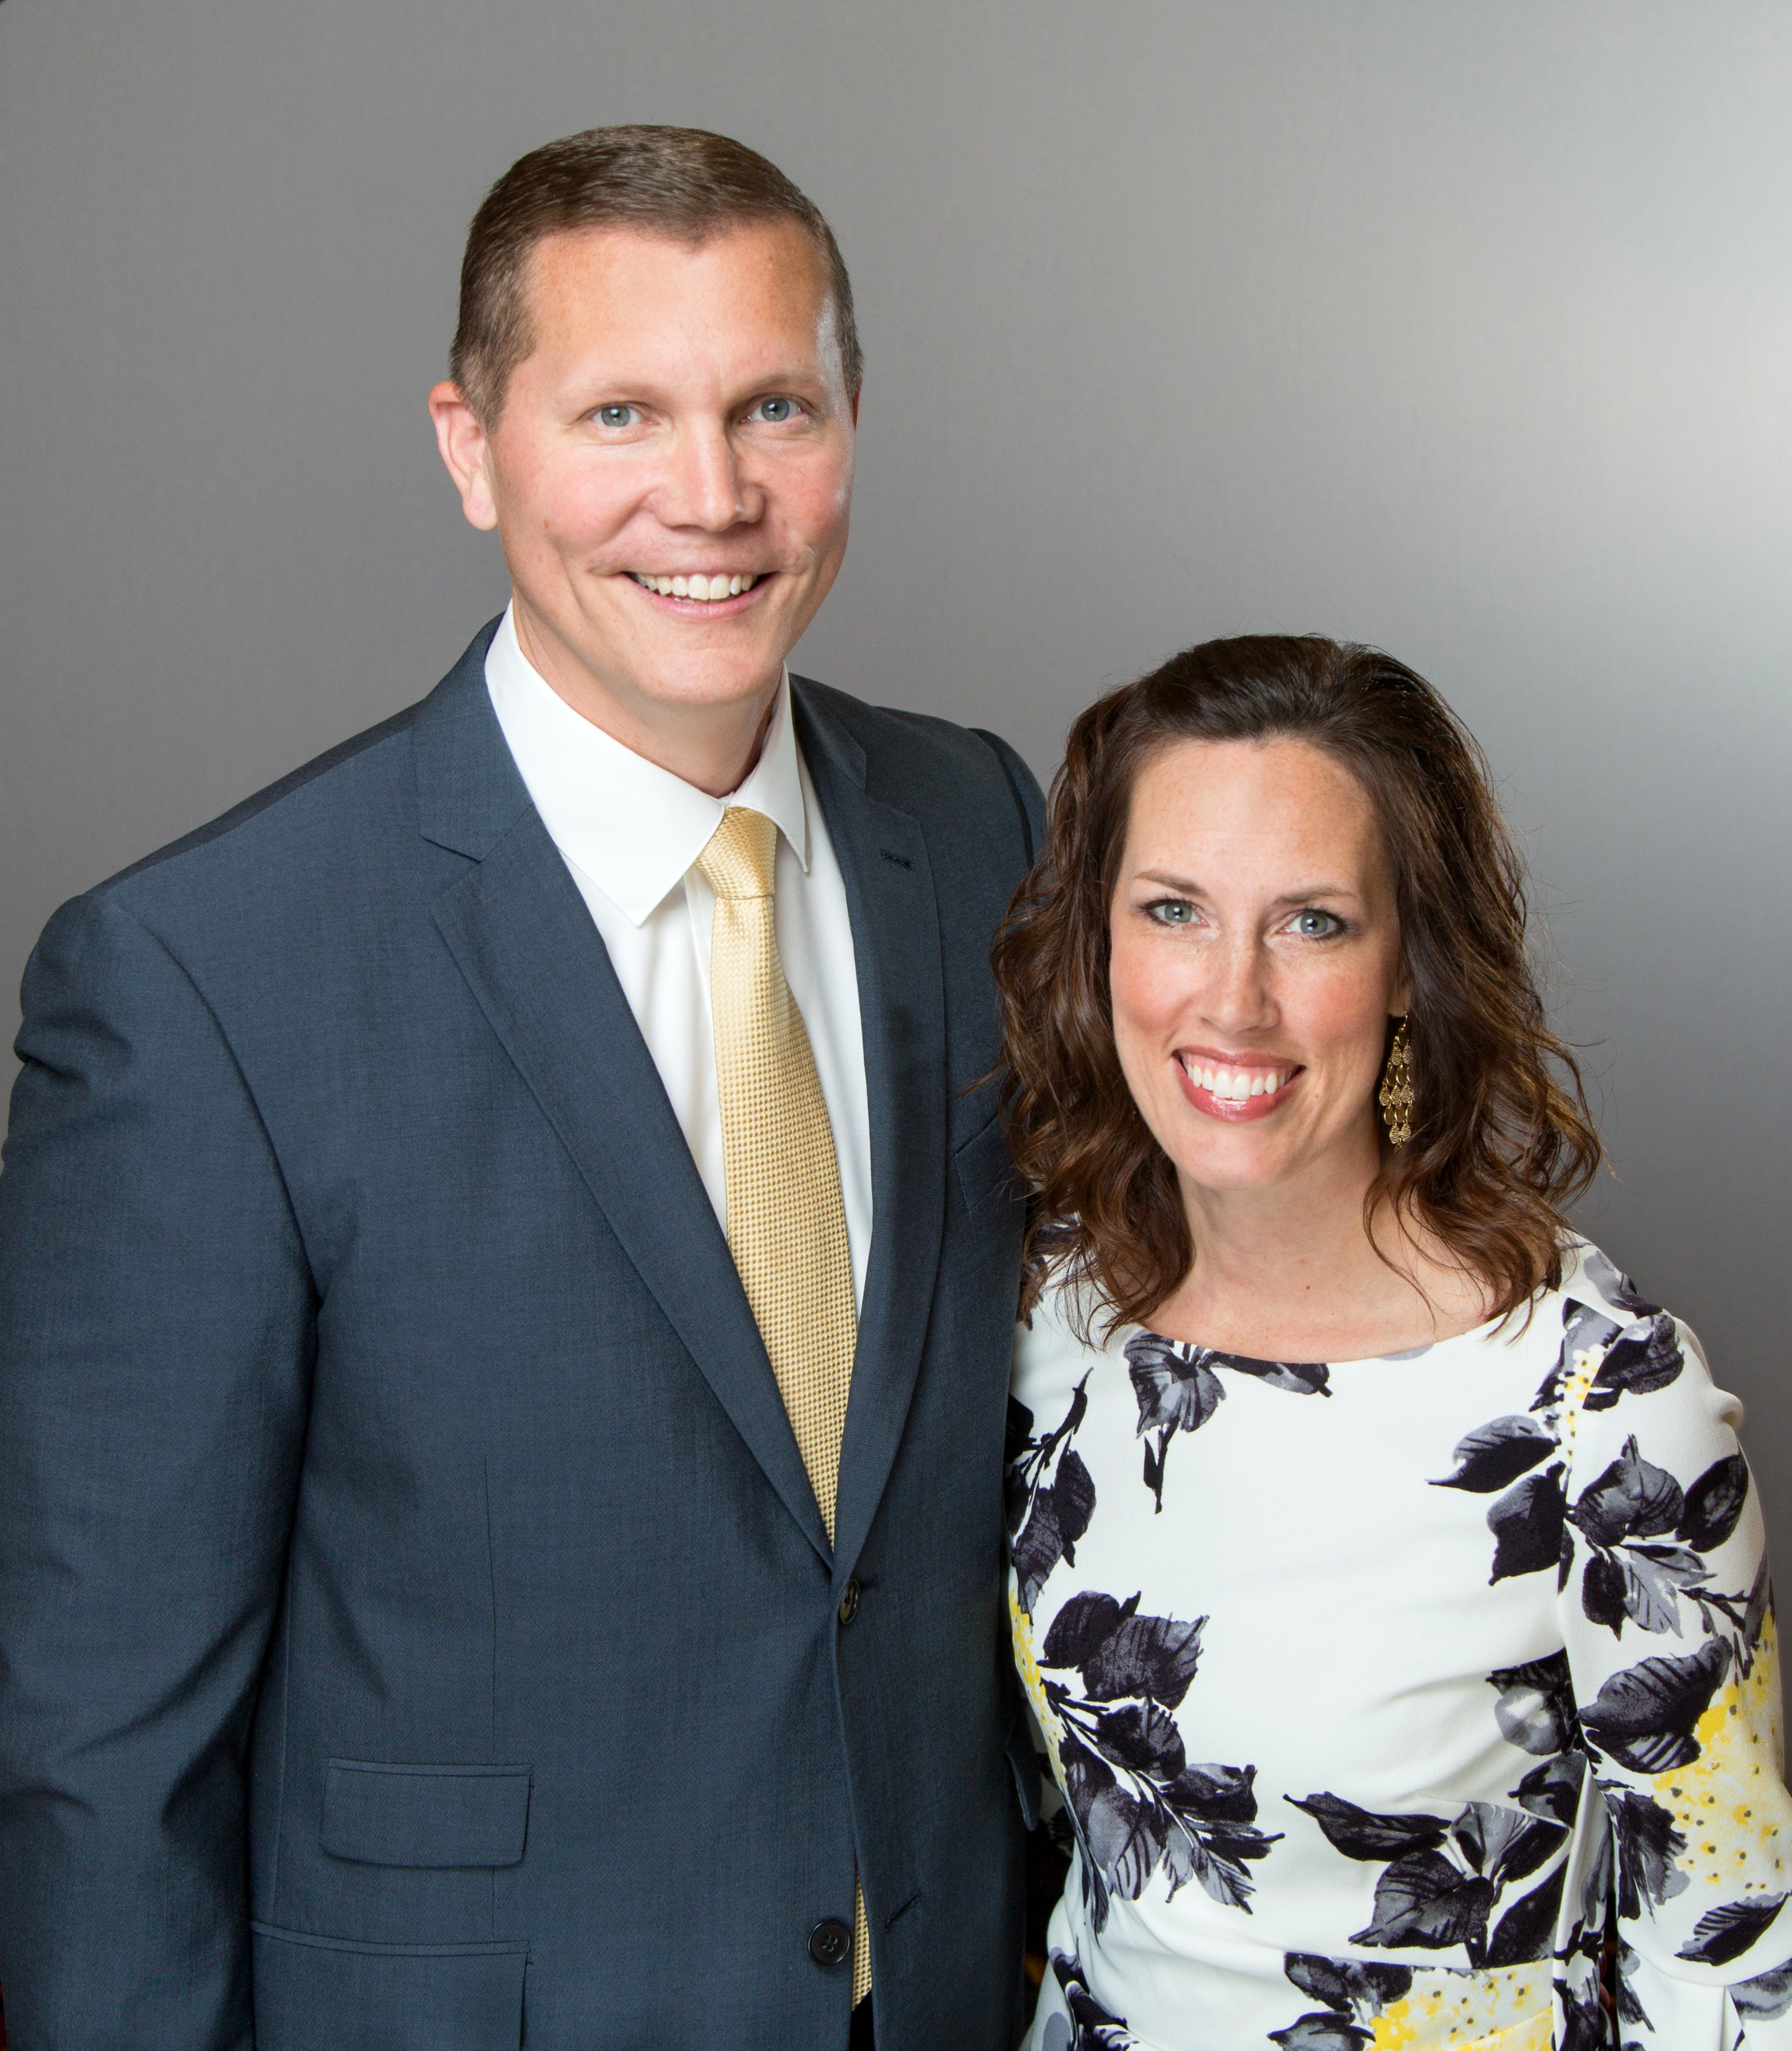 Bonvera Profiles in Leadership: Tim & Brandy Jarvinen